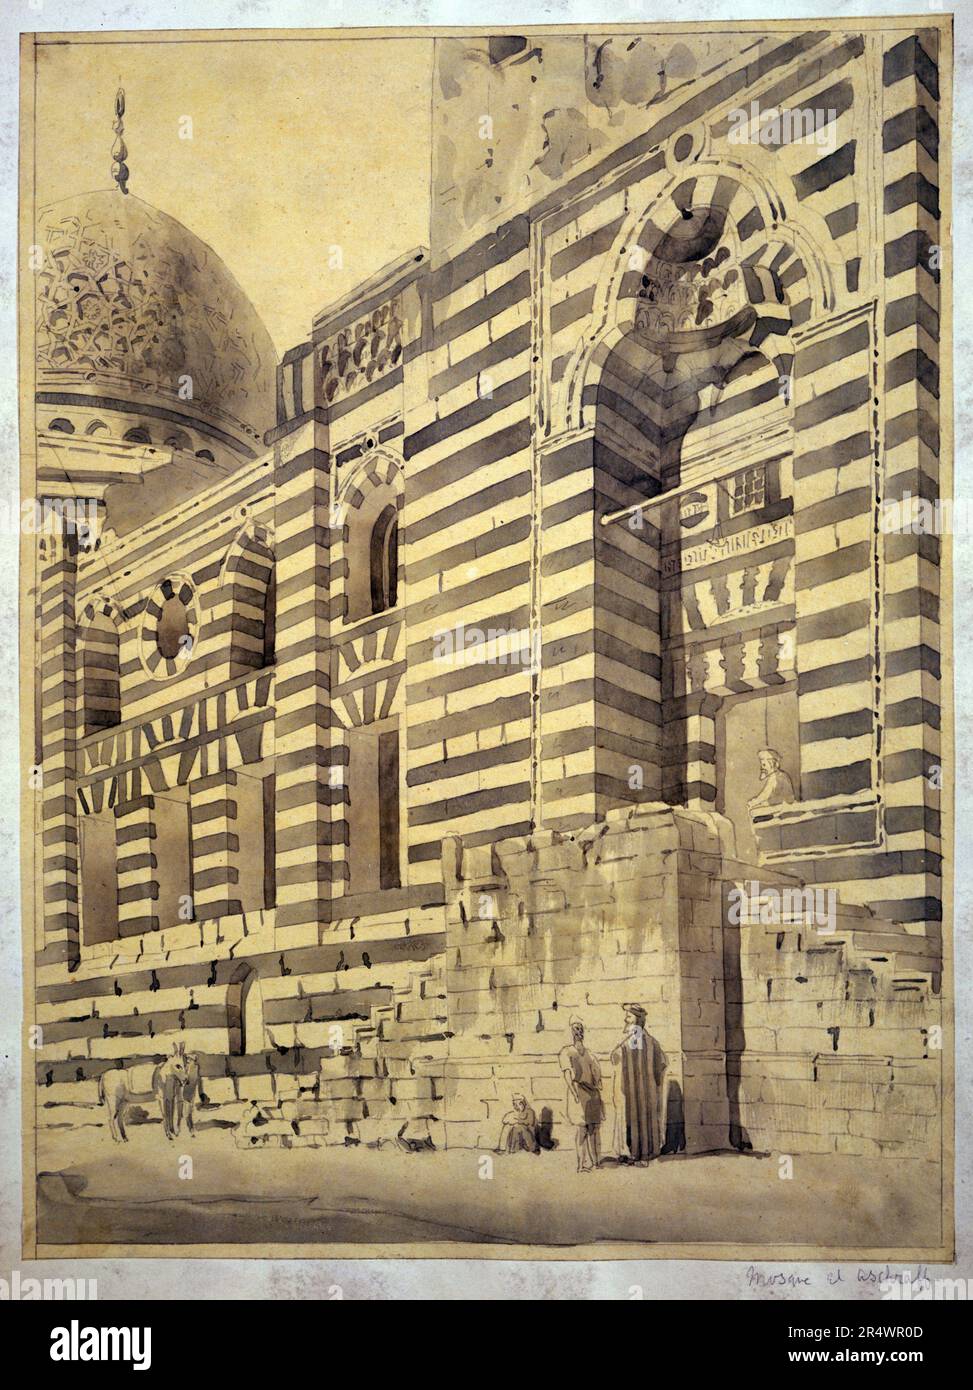 Mosque of el-Aschraff', c1866. Watercolour.  Richard Phene Spiers (1838-1916) English Architect.  Exterior of Sultan Ashref Al-Barsbay Mosque, Khan-e-Khalili, Cairo, Egypt. Architecture Building Religious Islamic Stock Photo